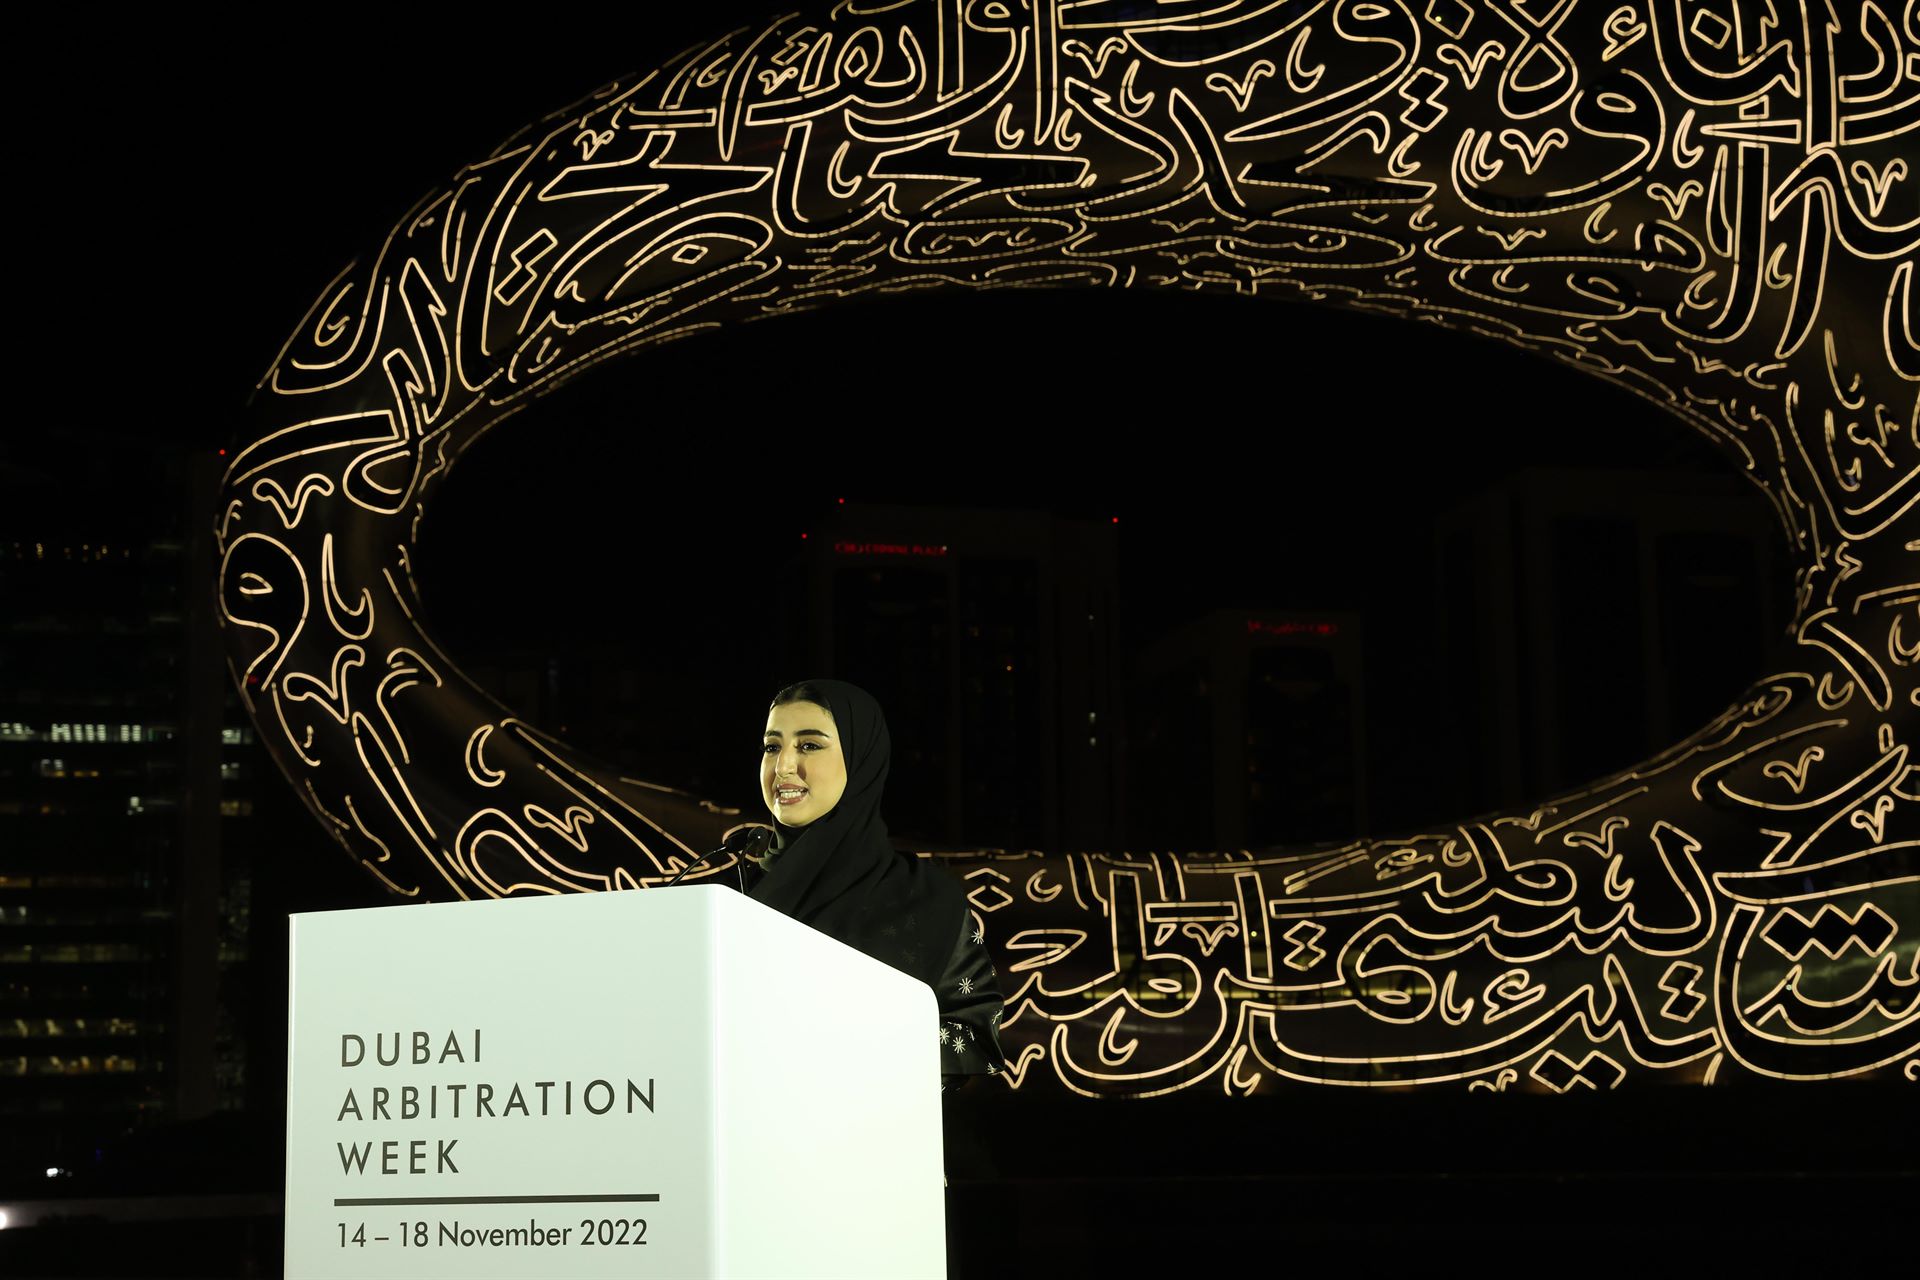 Dubai Arbitration Week 2022